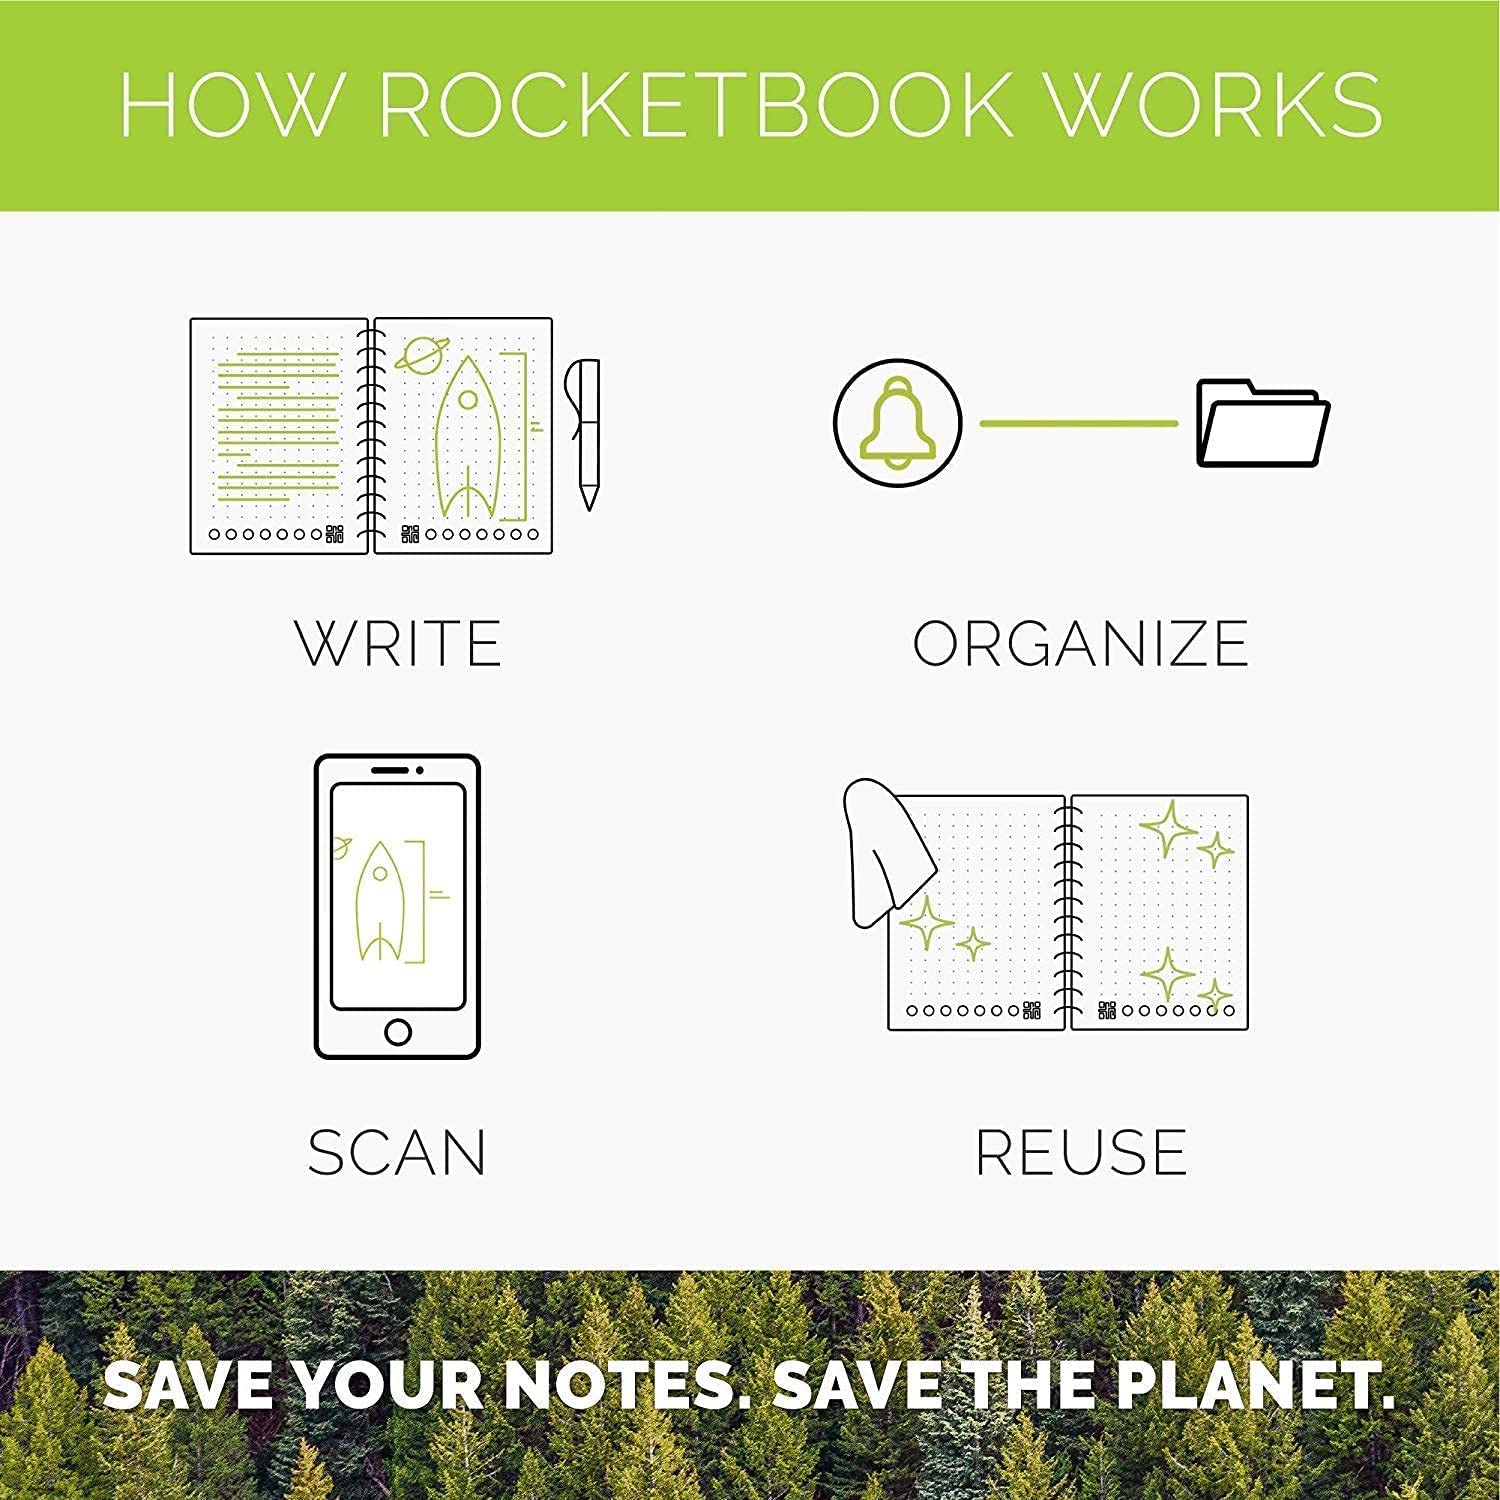 Rocketbook Ever Last Smart Reusable Notebook, Letter Size, 8.5" x 11", Midnight Blue (EVR-L-K-CDF) by Rocketbook